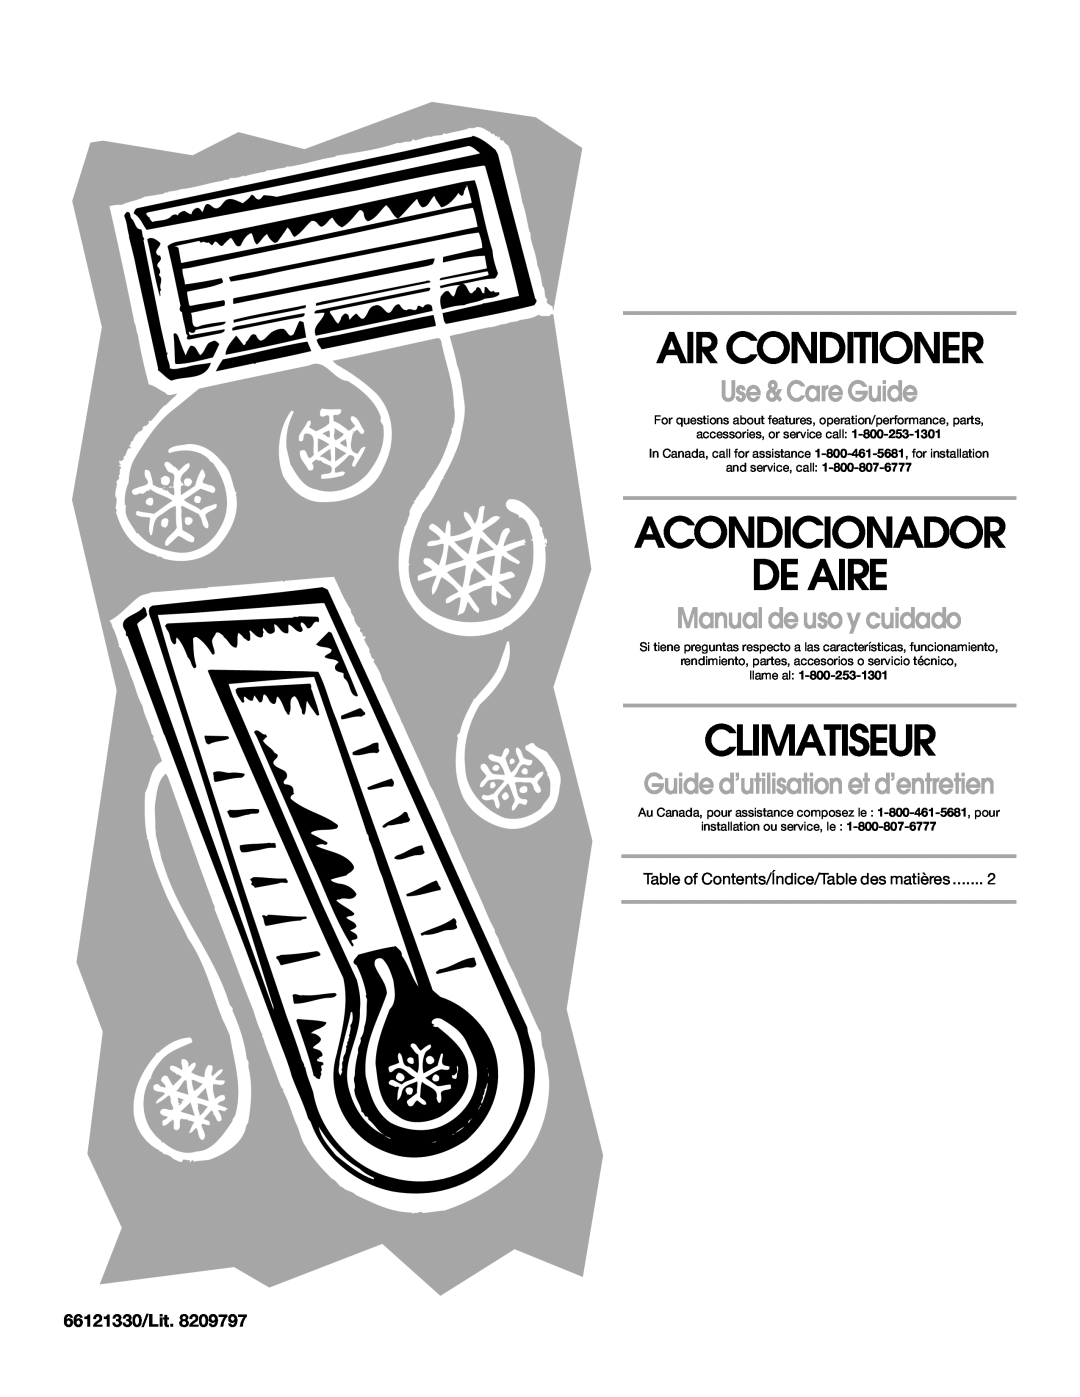 Whirlpool ACM052PS0 manual 66121330/Lit, Air Conditioner, Acondicionador De Aire, Climatiseur, Use & Care Guide, llame al 